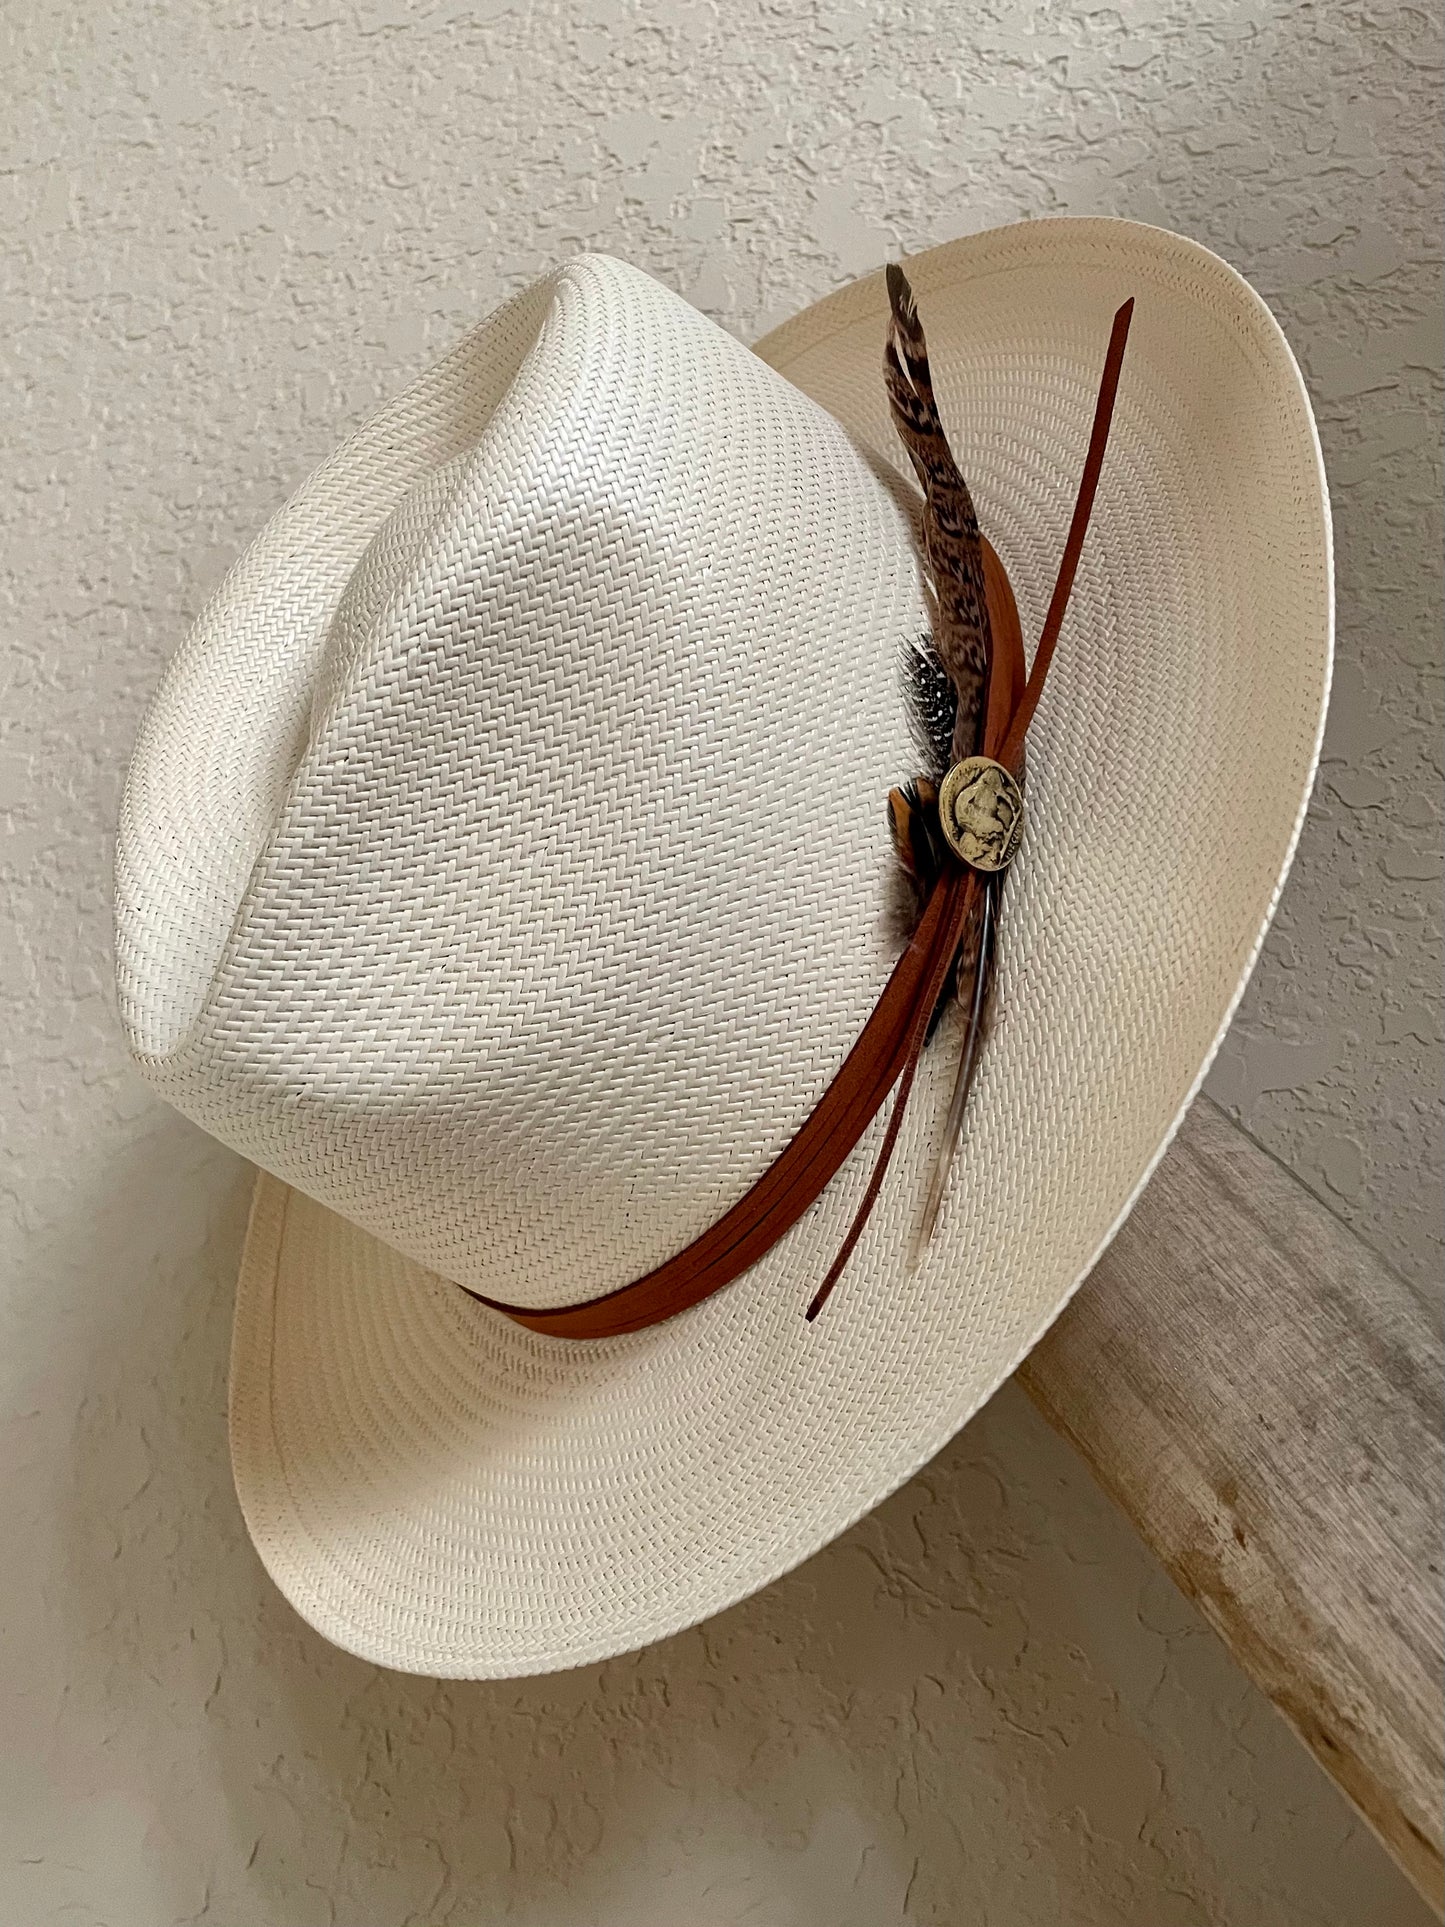 Stetson Tallahassee Shantung Straw Fedora Hat